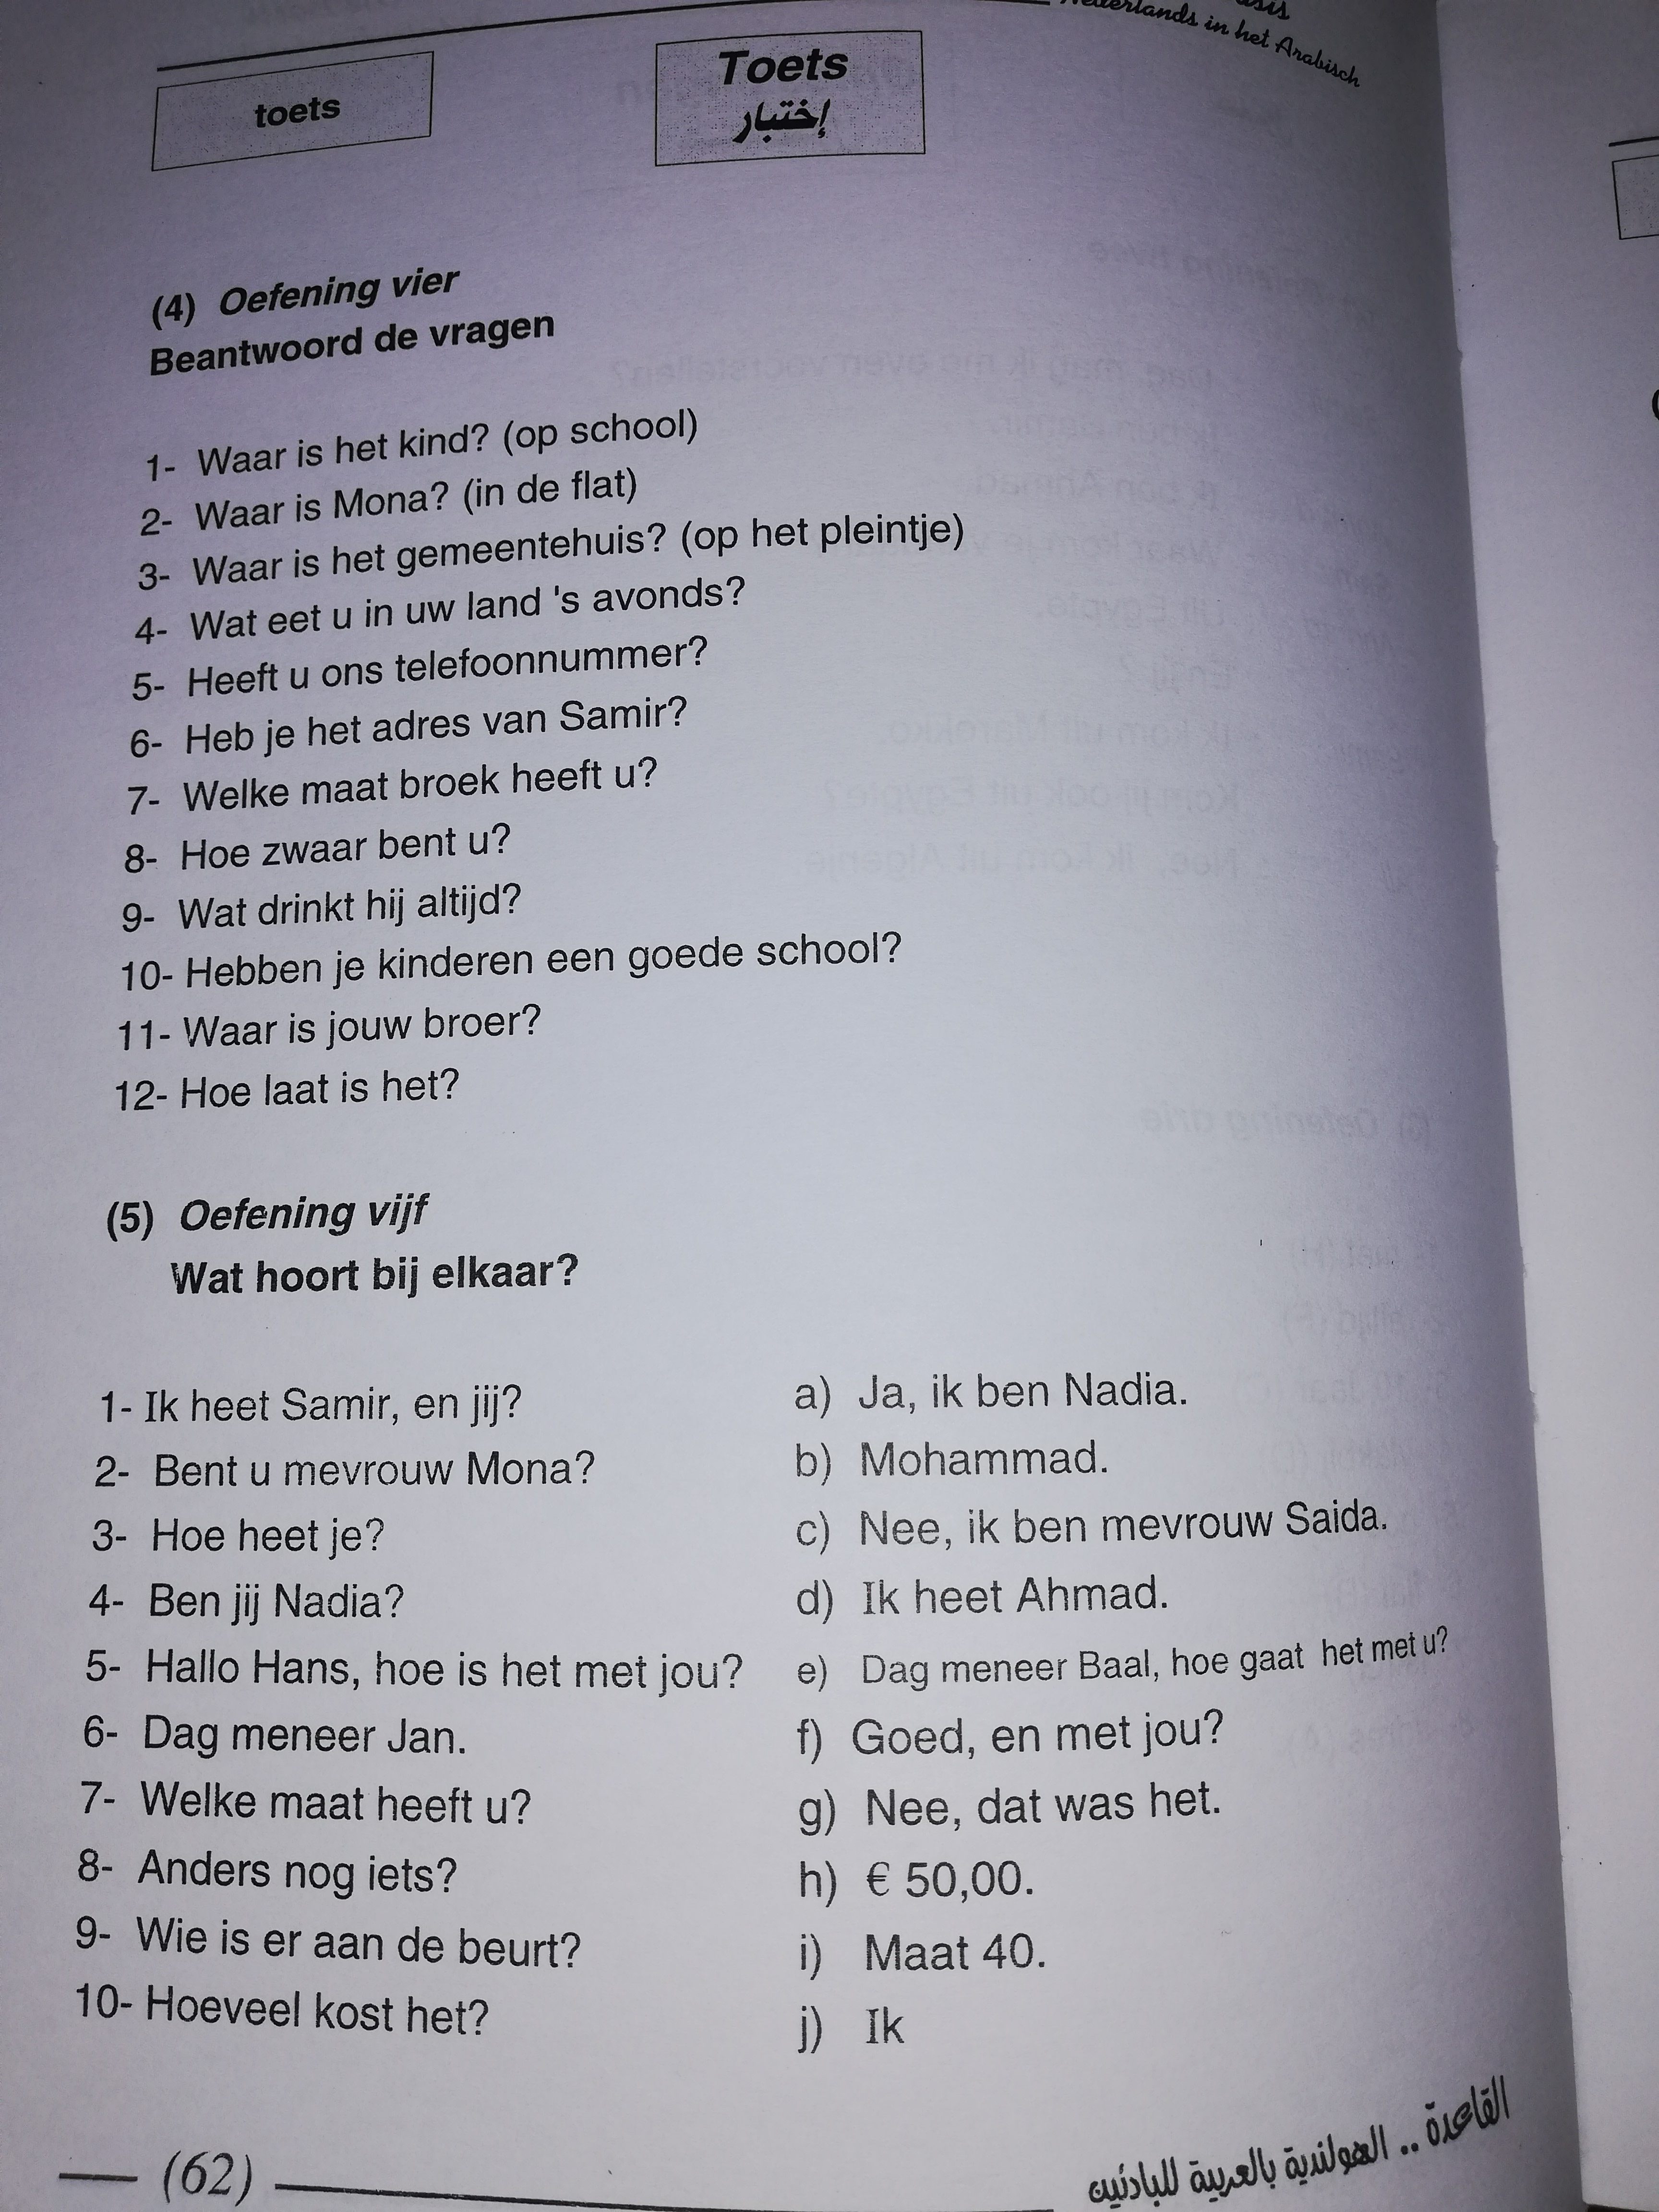 oplossingen تعلم اللغة الهولندية بسهولة